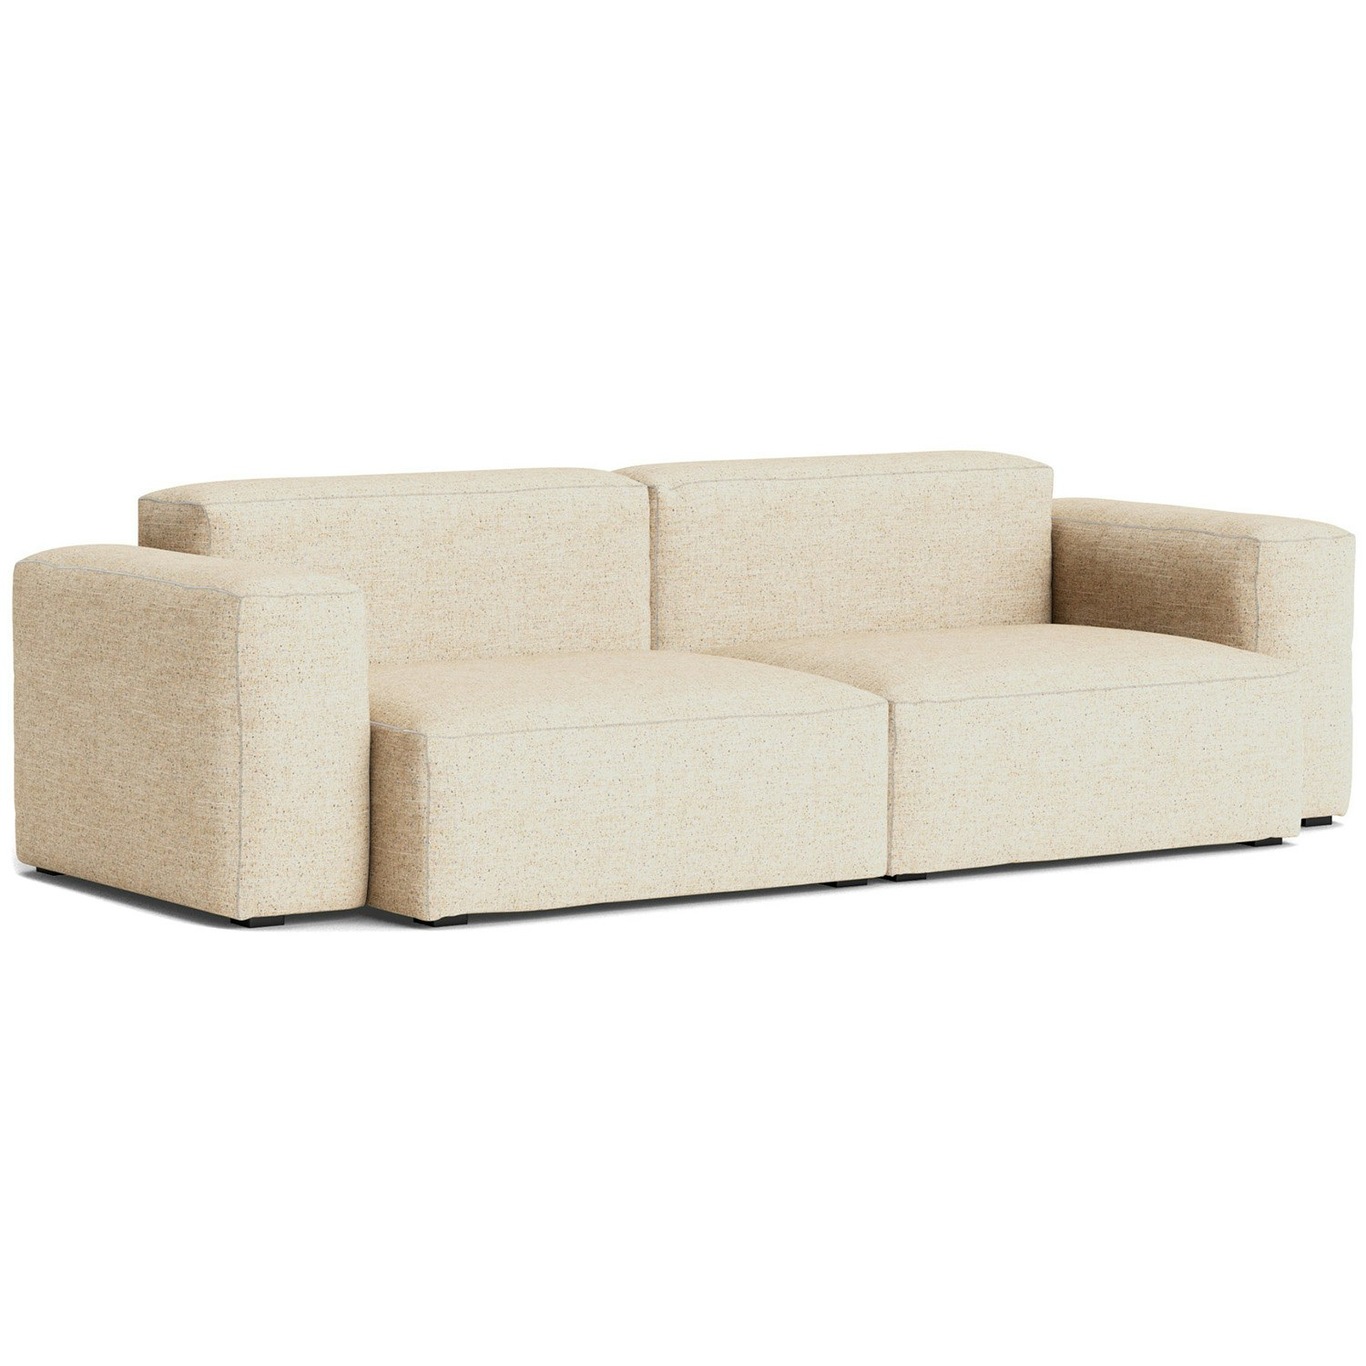 Mags Soft Low 2,5-Sitzer-Sofa Comb. 1, Bolgheri LG60 / Weiße Naht